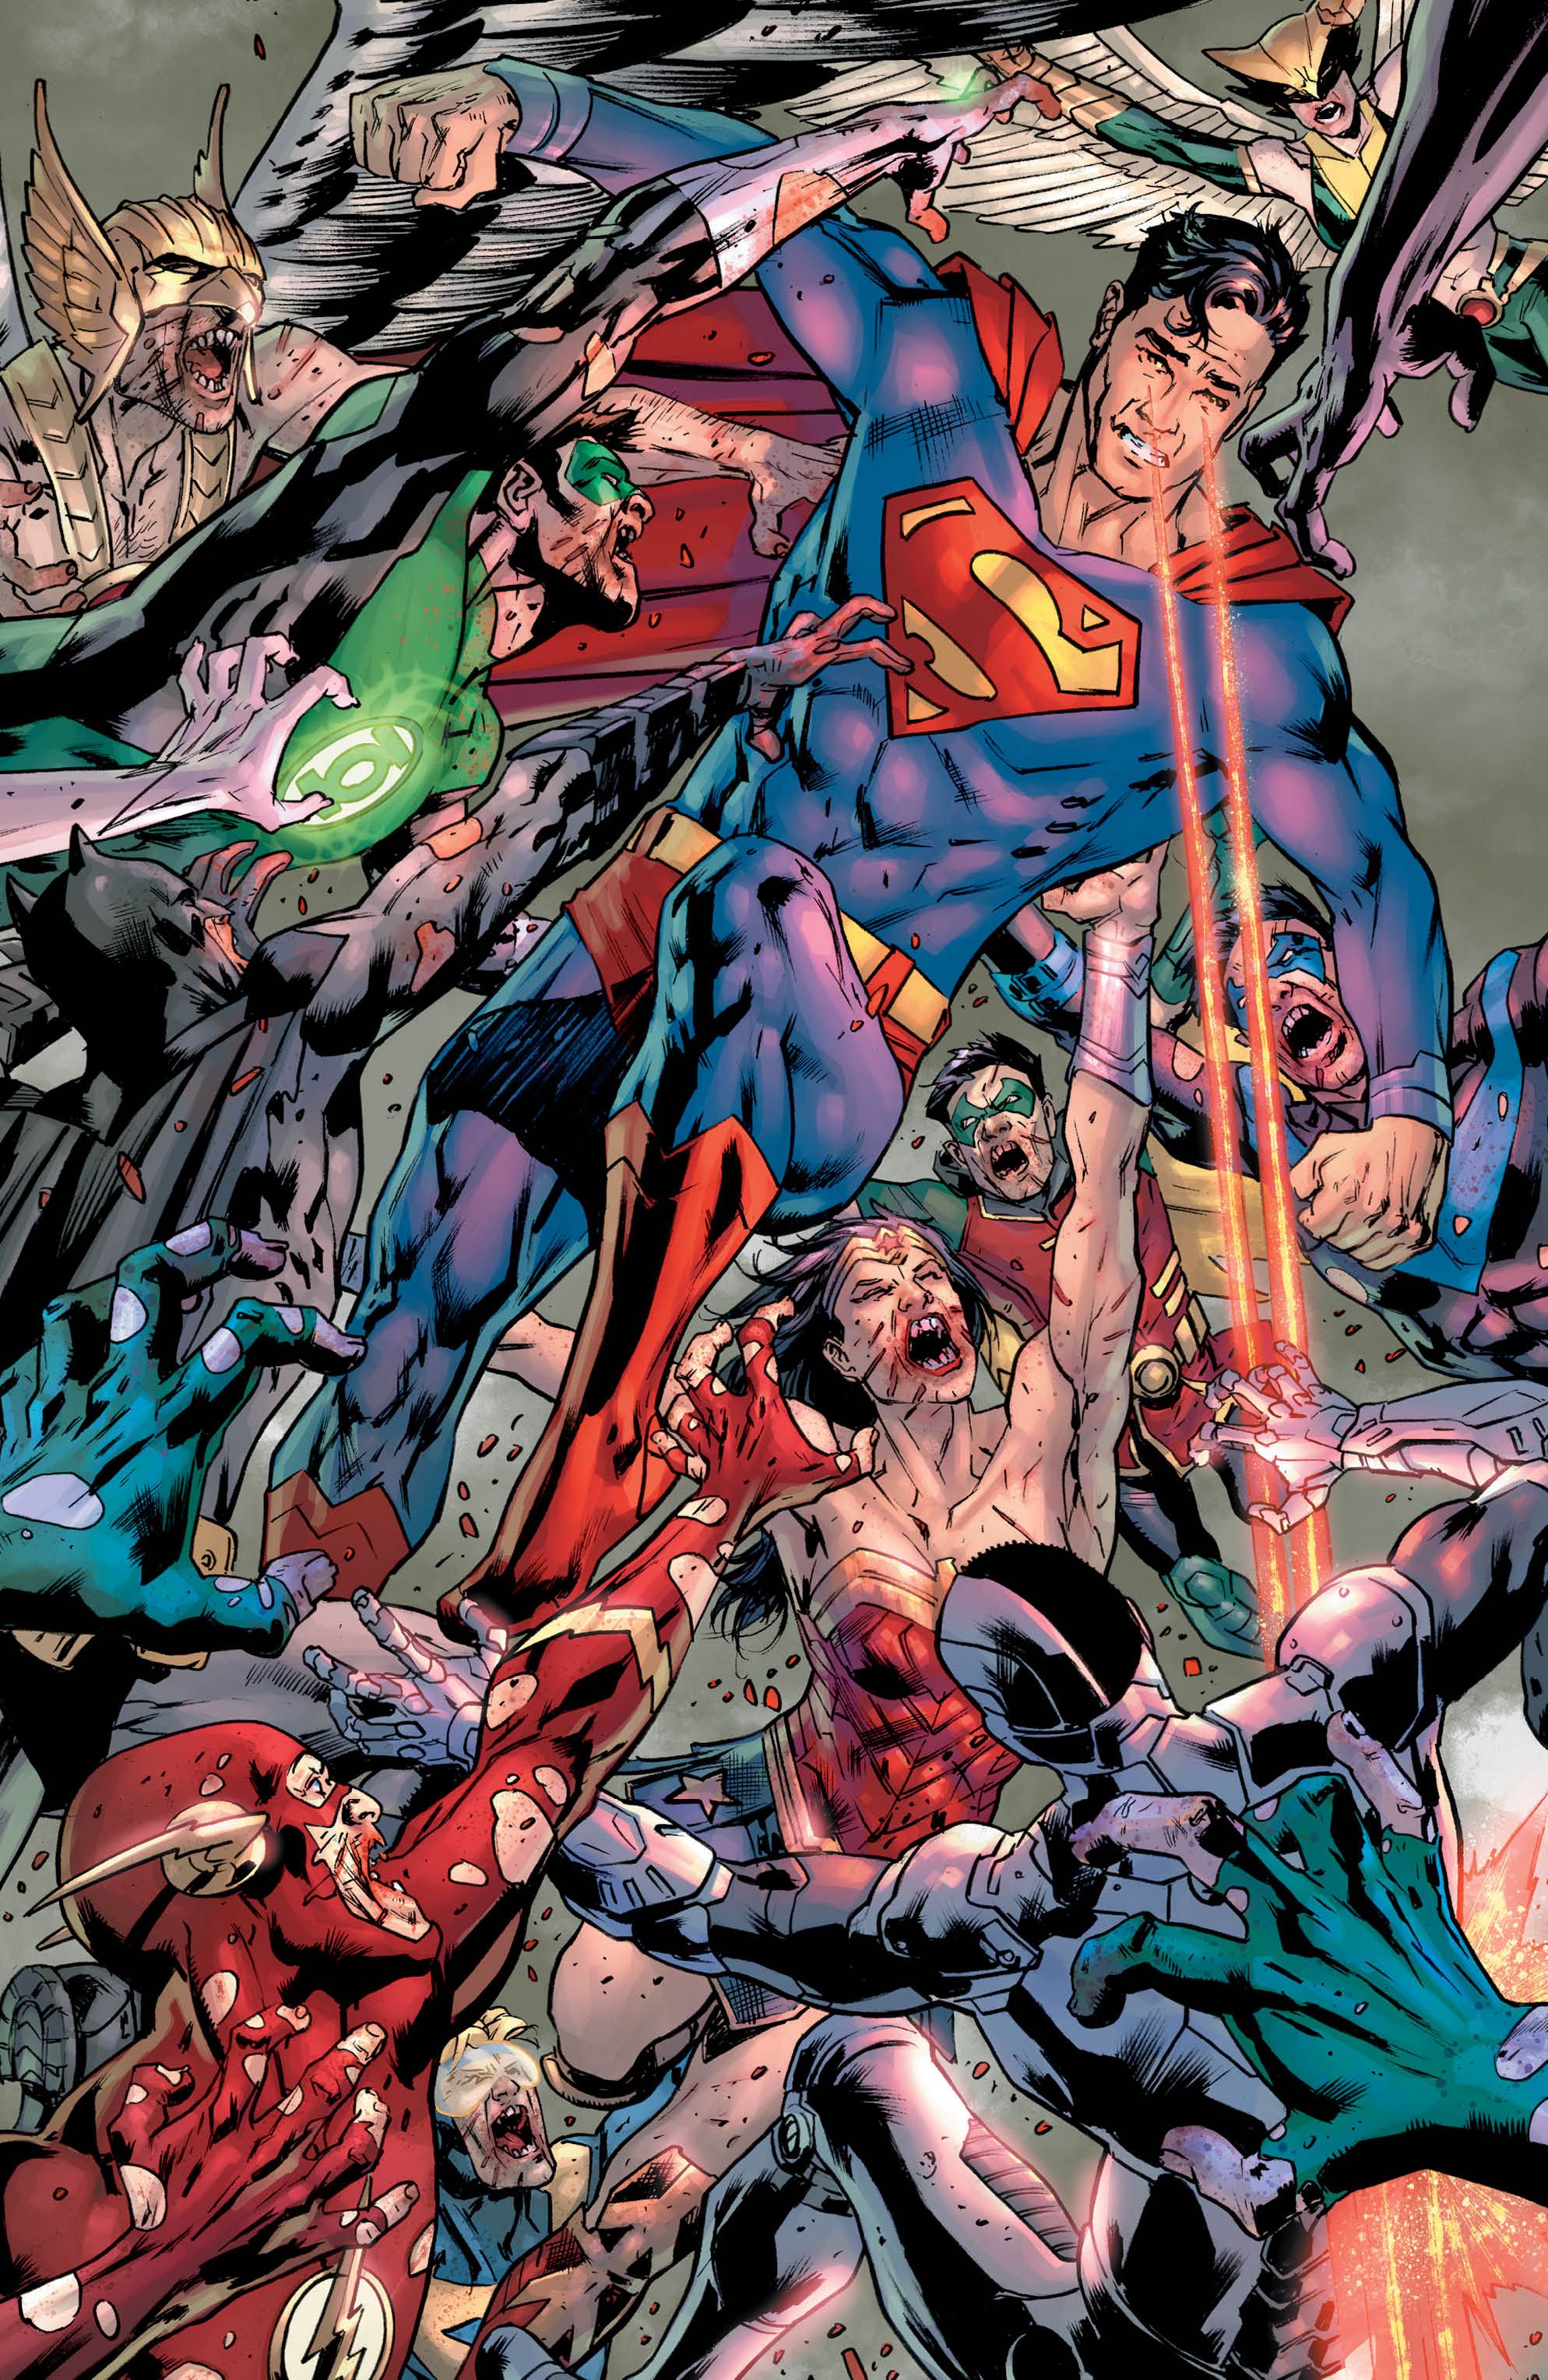 PREVIEW: Action Comics #1016